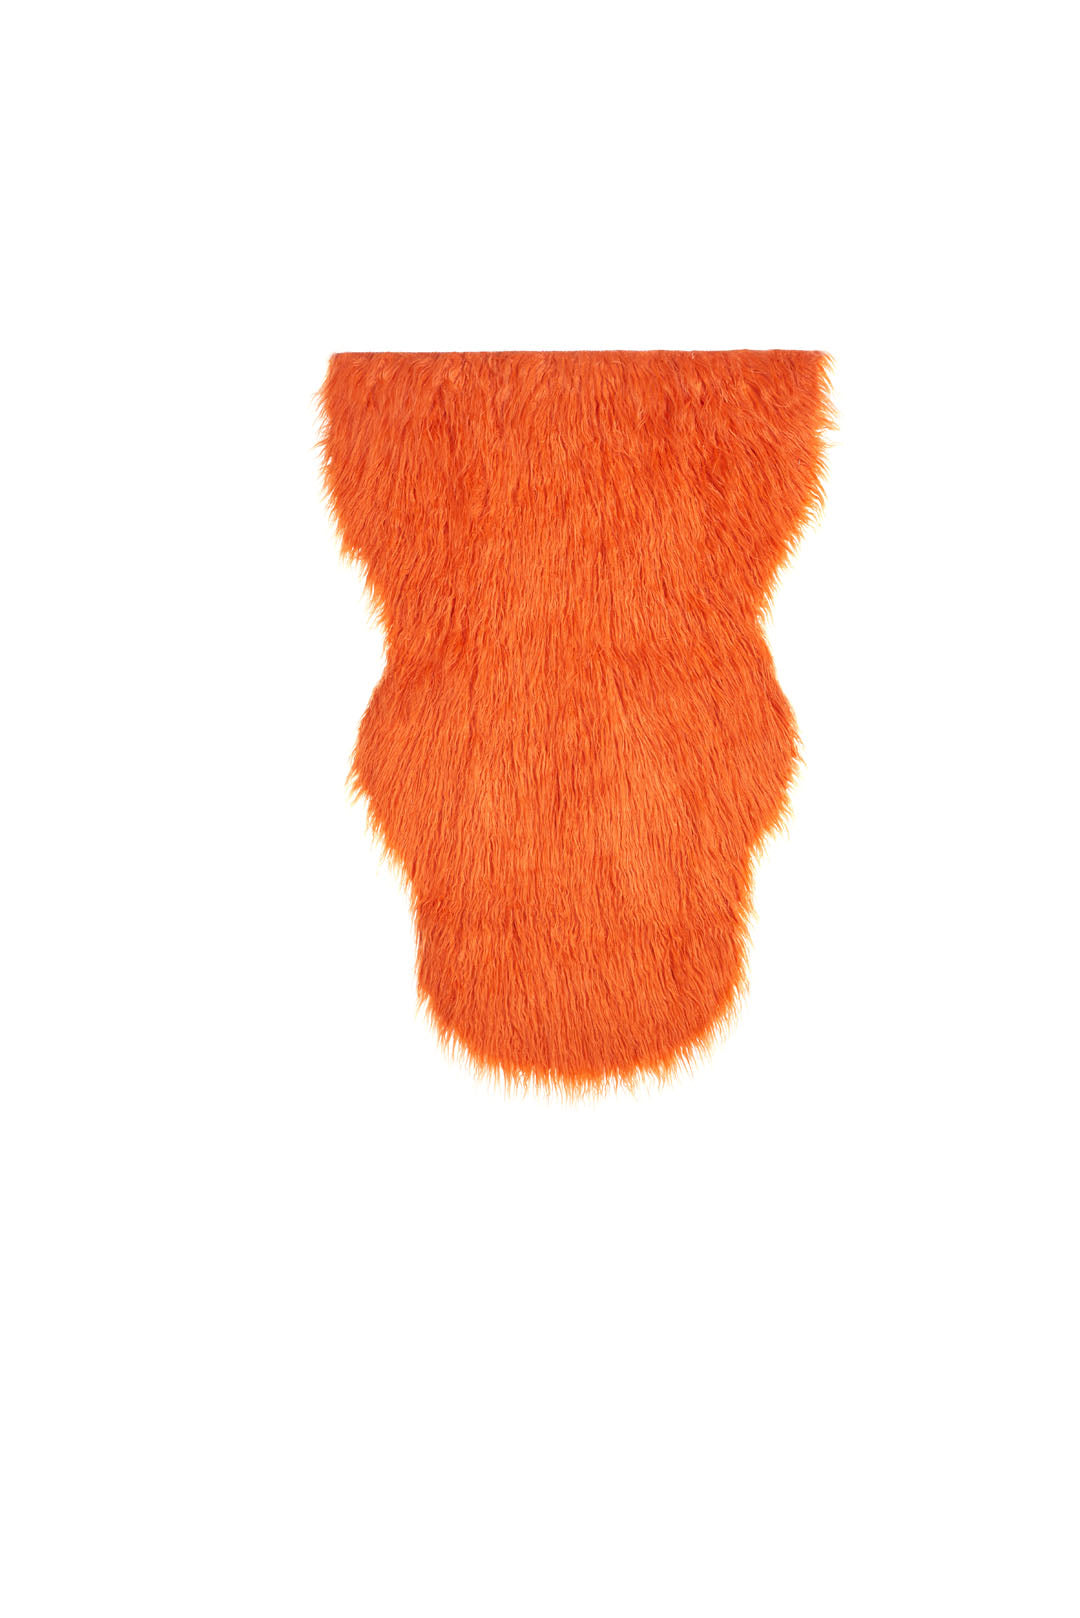 Orange Alpaca Faux Fur Shag Rug | Signature Collection